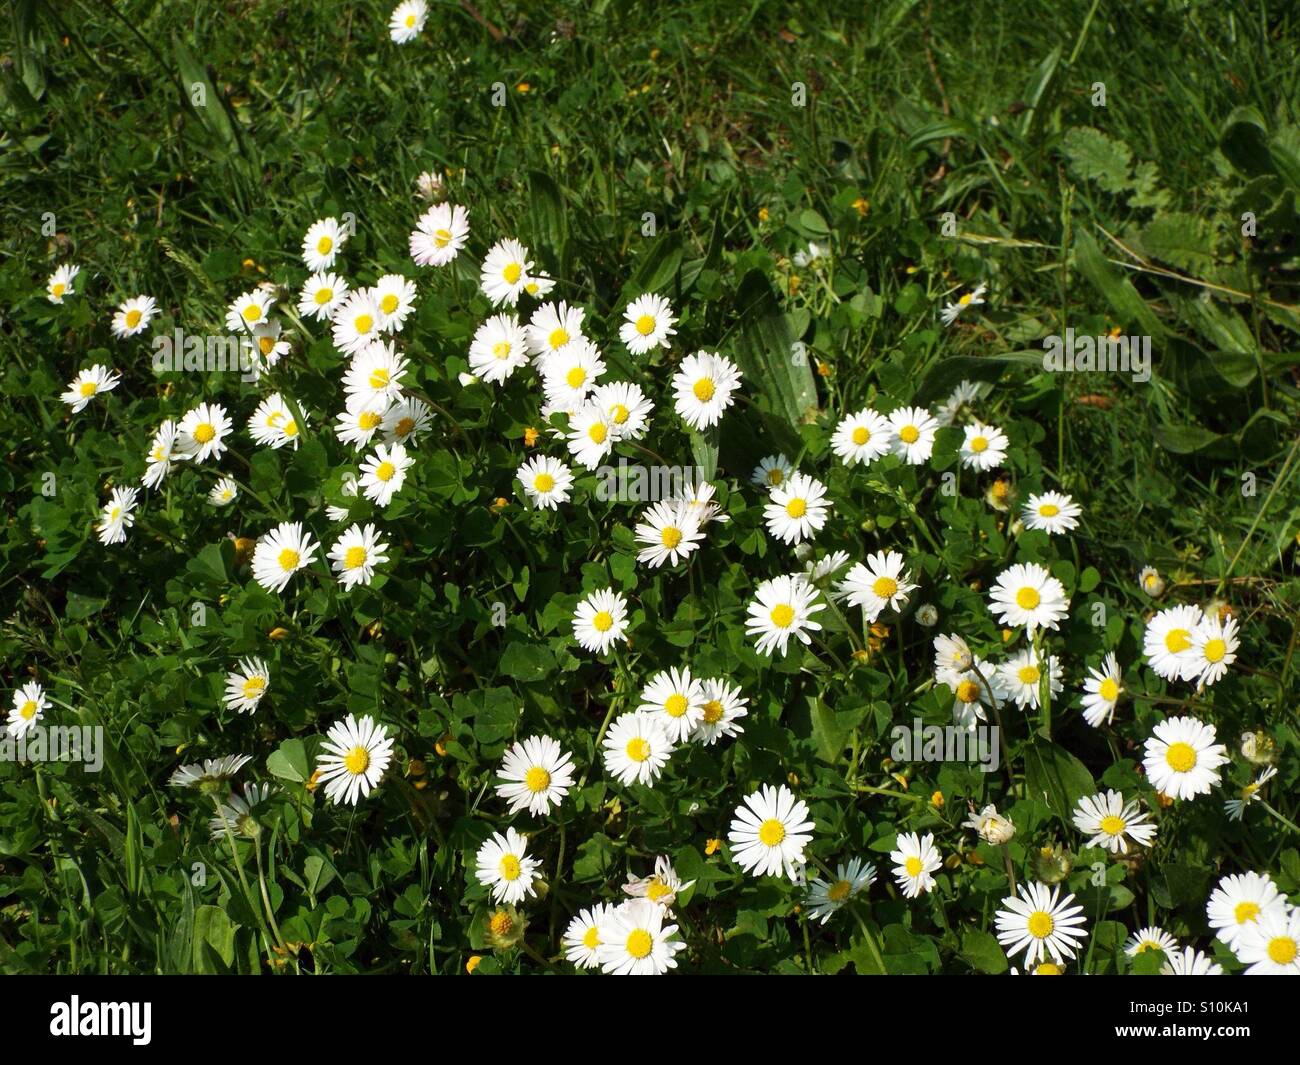 Daisy flower White yellow green grass background natural nature. Stock Photo